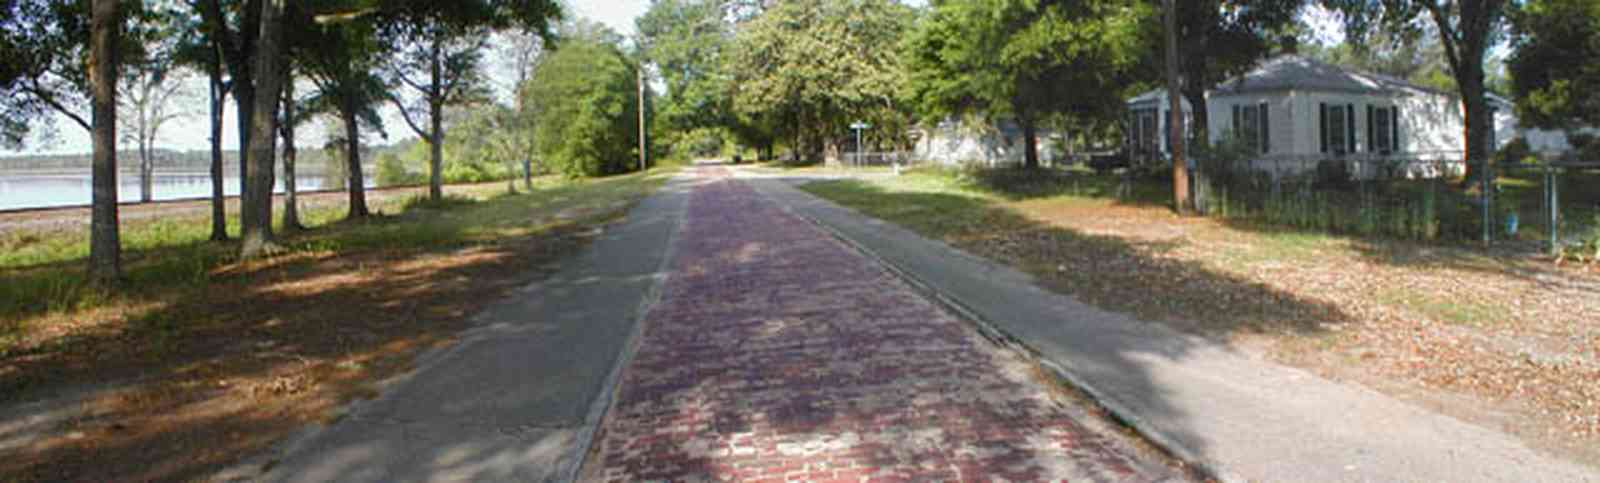 Milton:-Red-Brick-Road_10.jpg:  brick road, highway, two-lane road, red brick